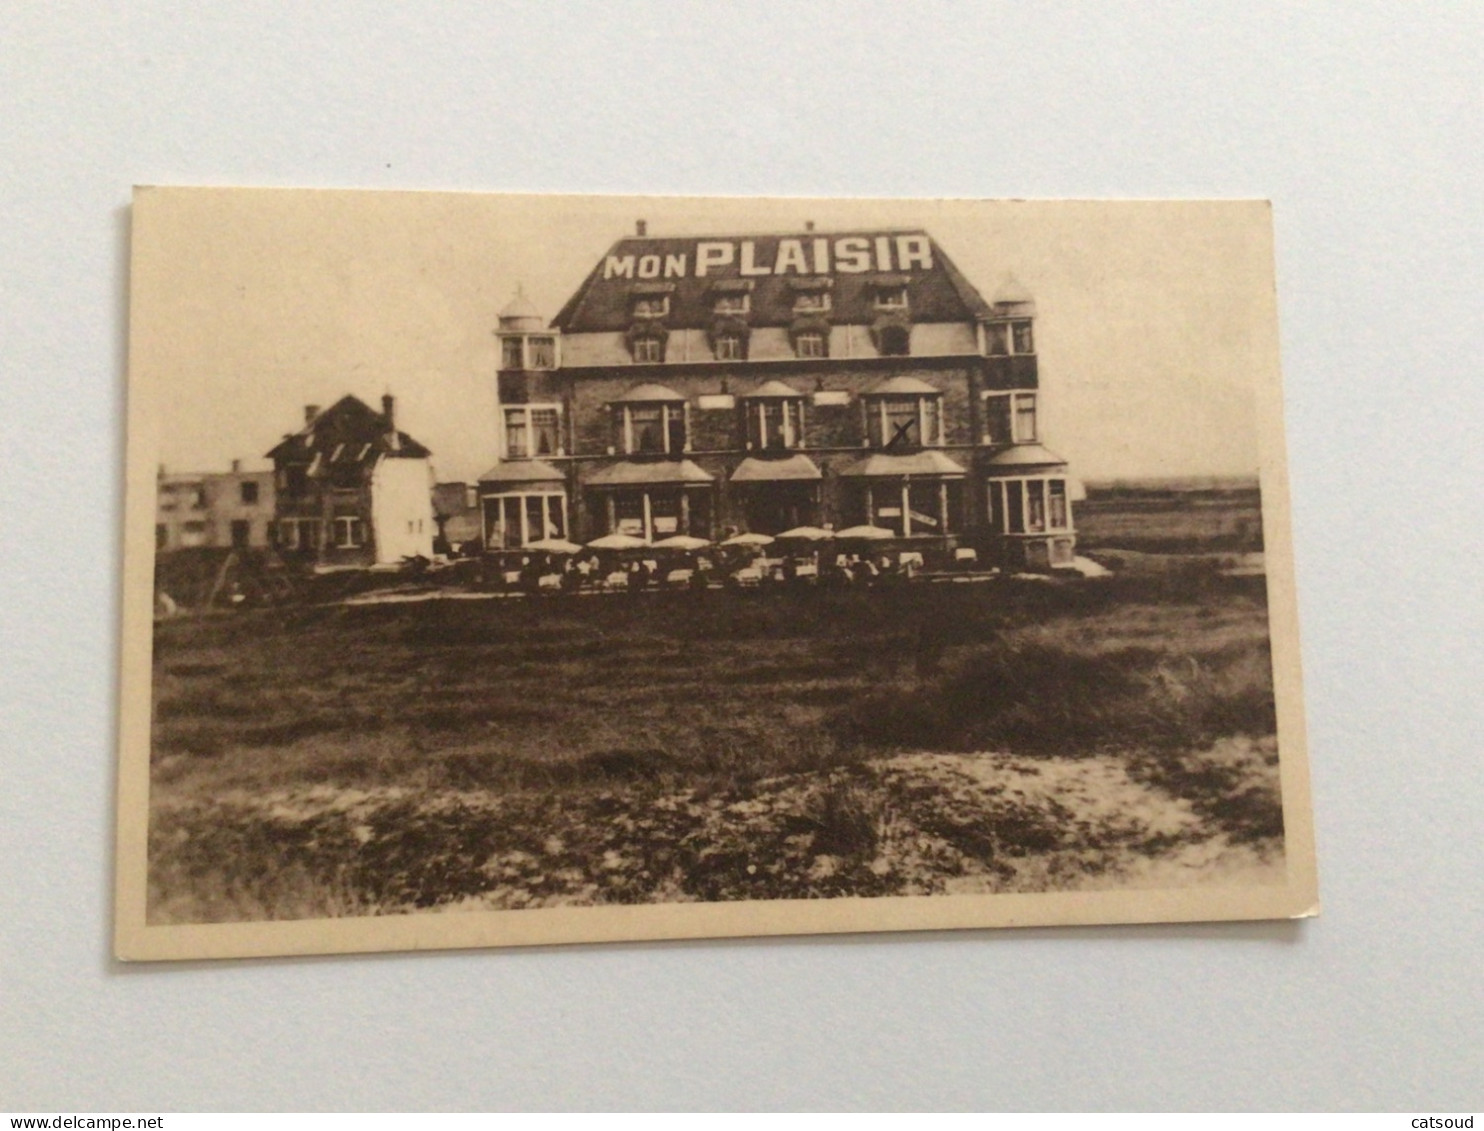 Carte Postale Ancienne (1937) Middelkerke (Crocodile) Hôtel Mon Plaisir Prop.Fl. Pinet - Middelkerke